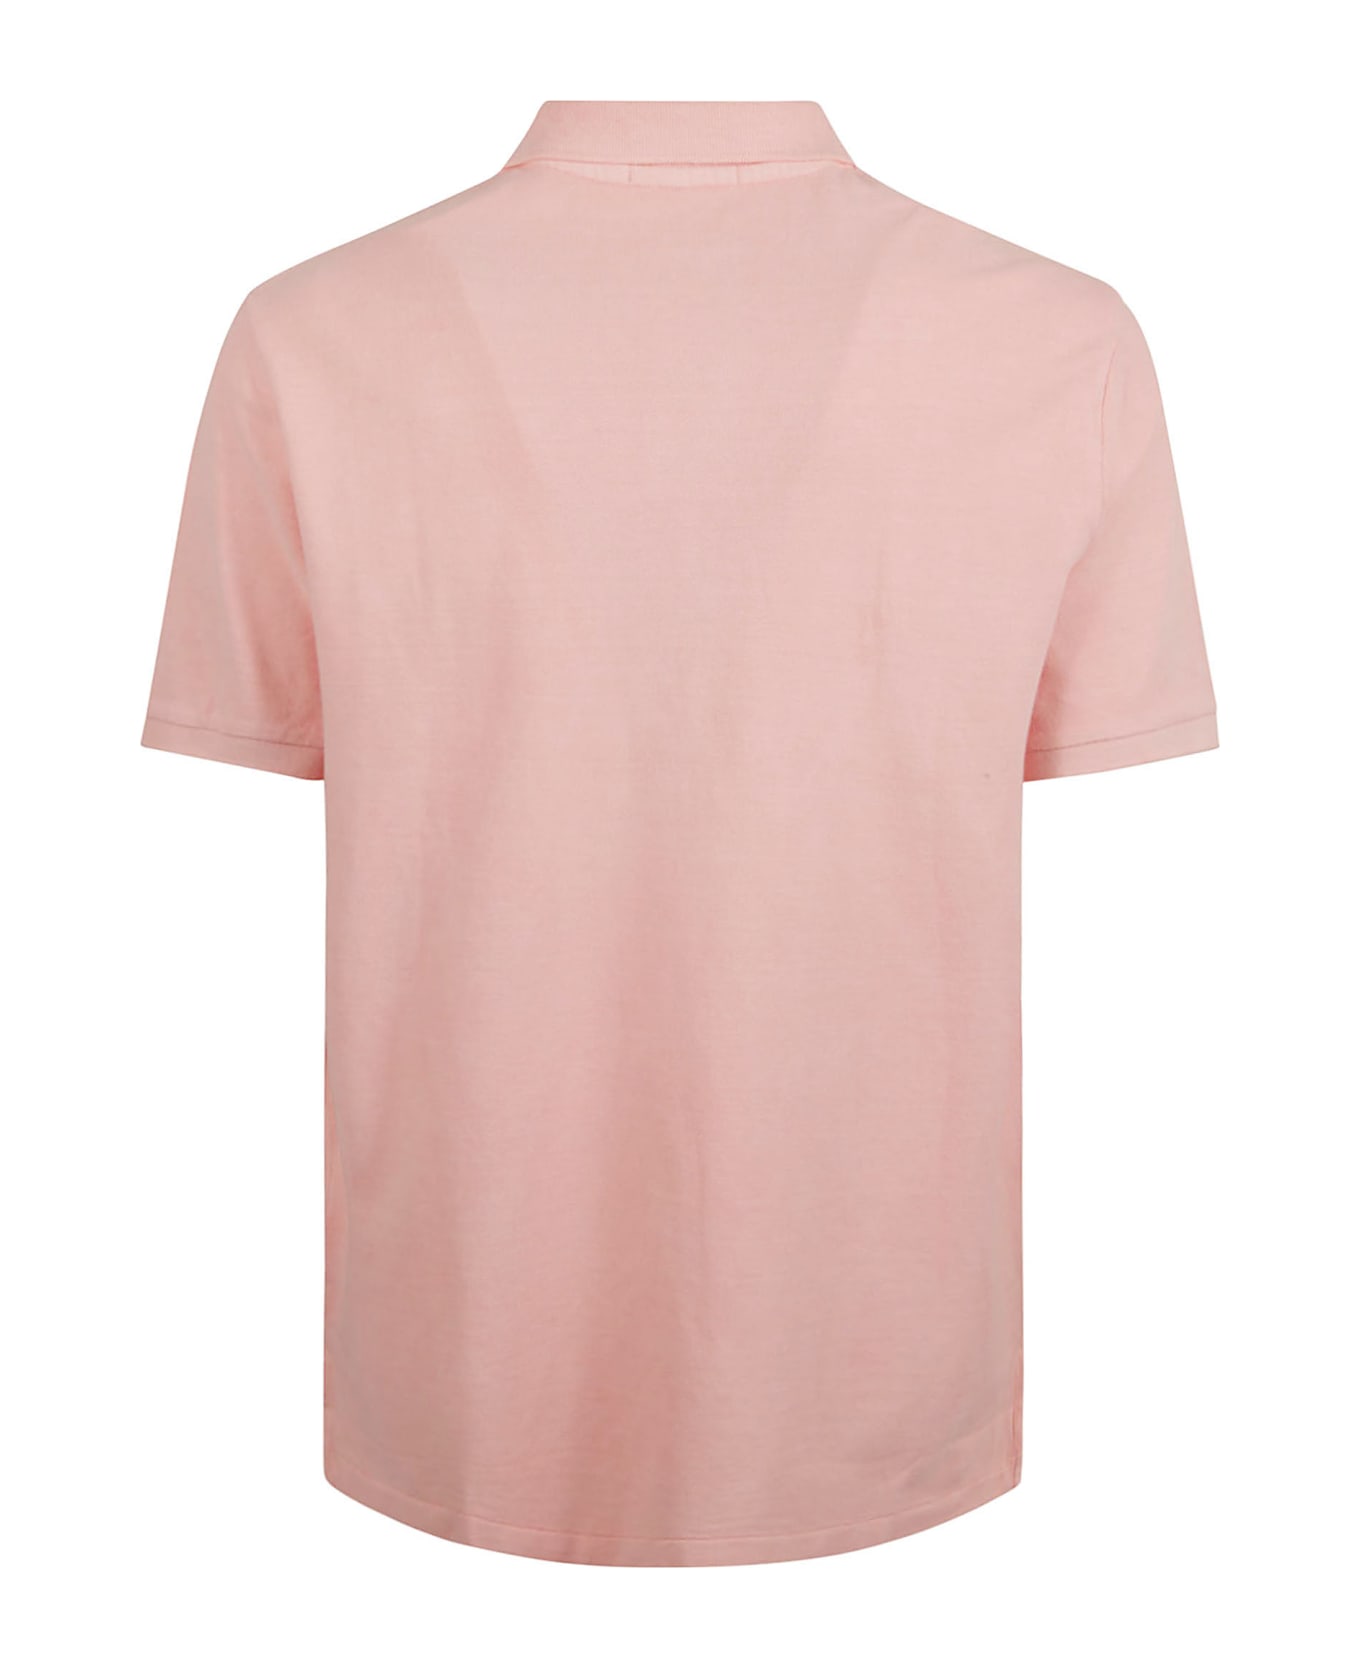 Ralph Lauren Logo Embroidered Polo Shirt - Pink